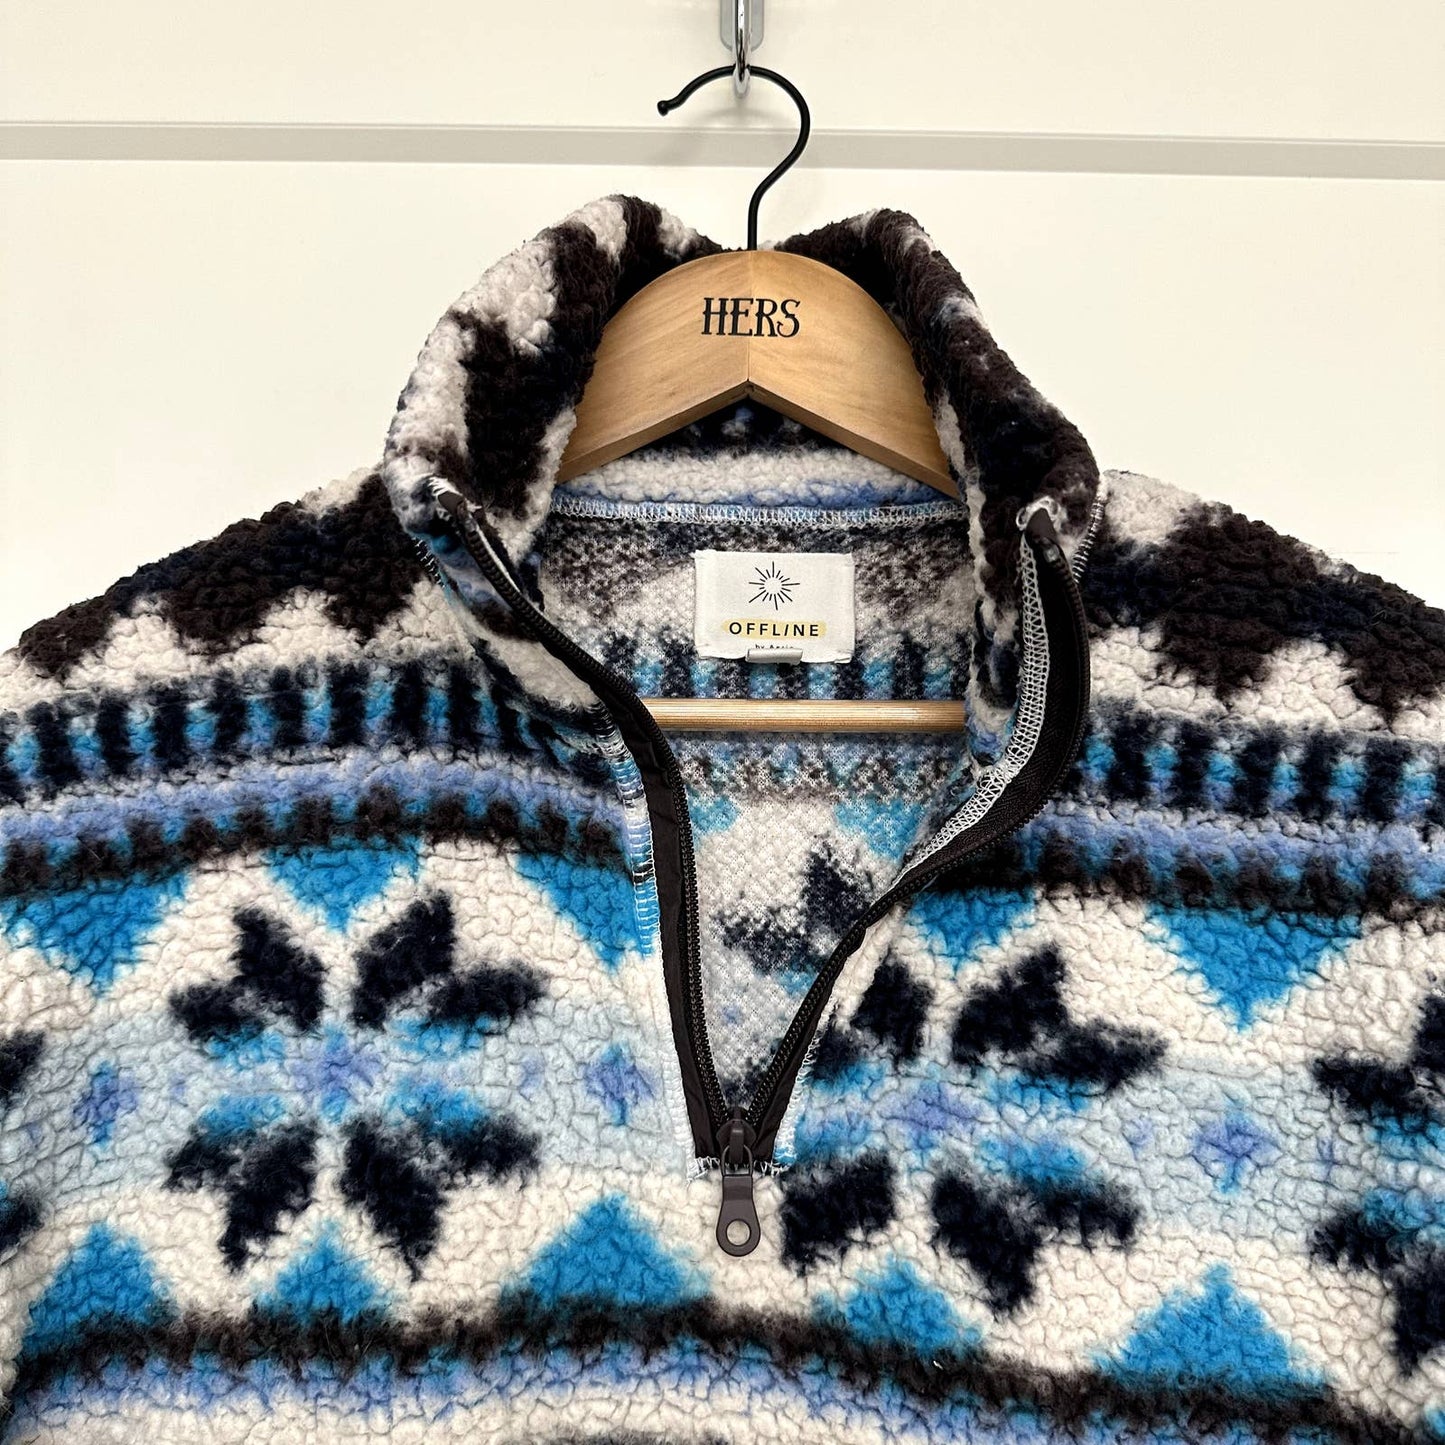 Offline Aerie Aztec Fair Isle printed sherpa fleece quarter zip cozy sweater